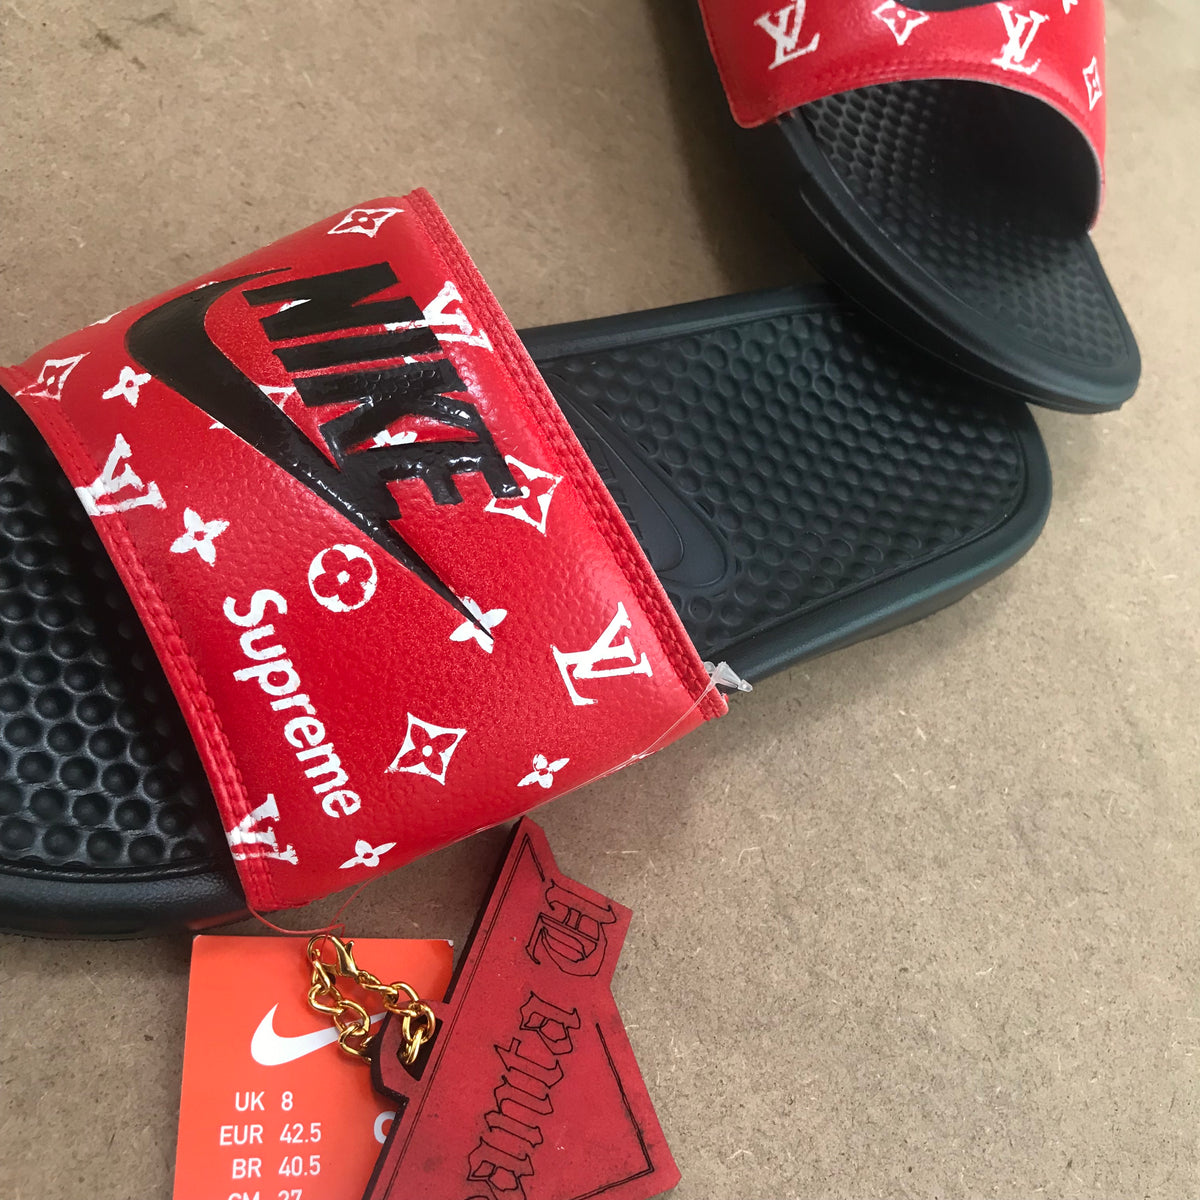 Custom Louis Vuitton Nike Slides! - Jordan Vincent 